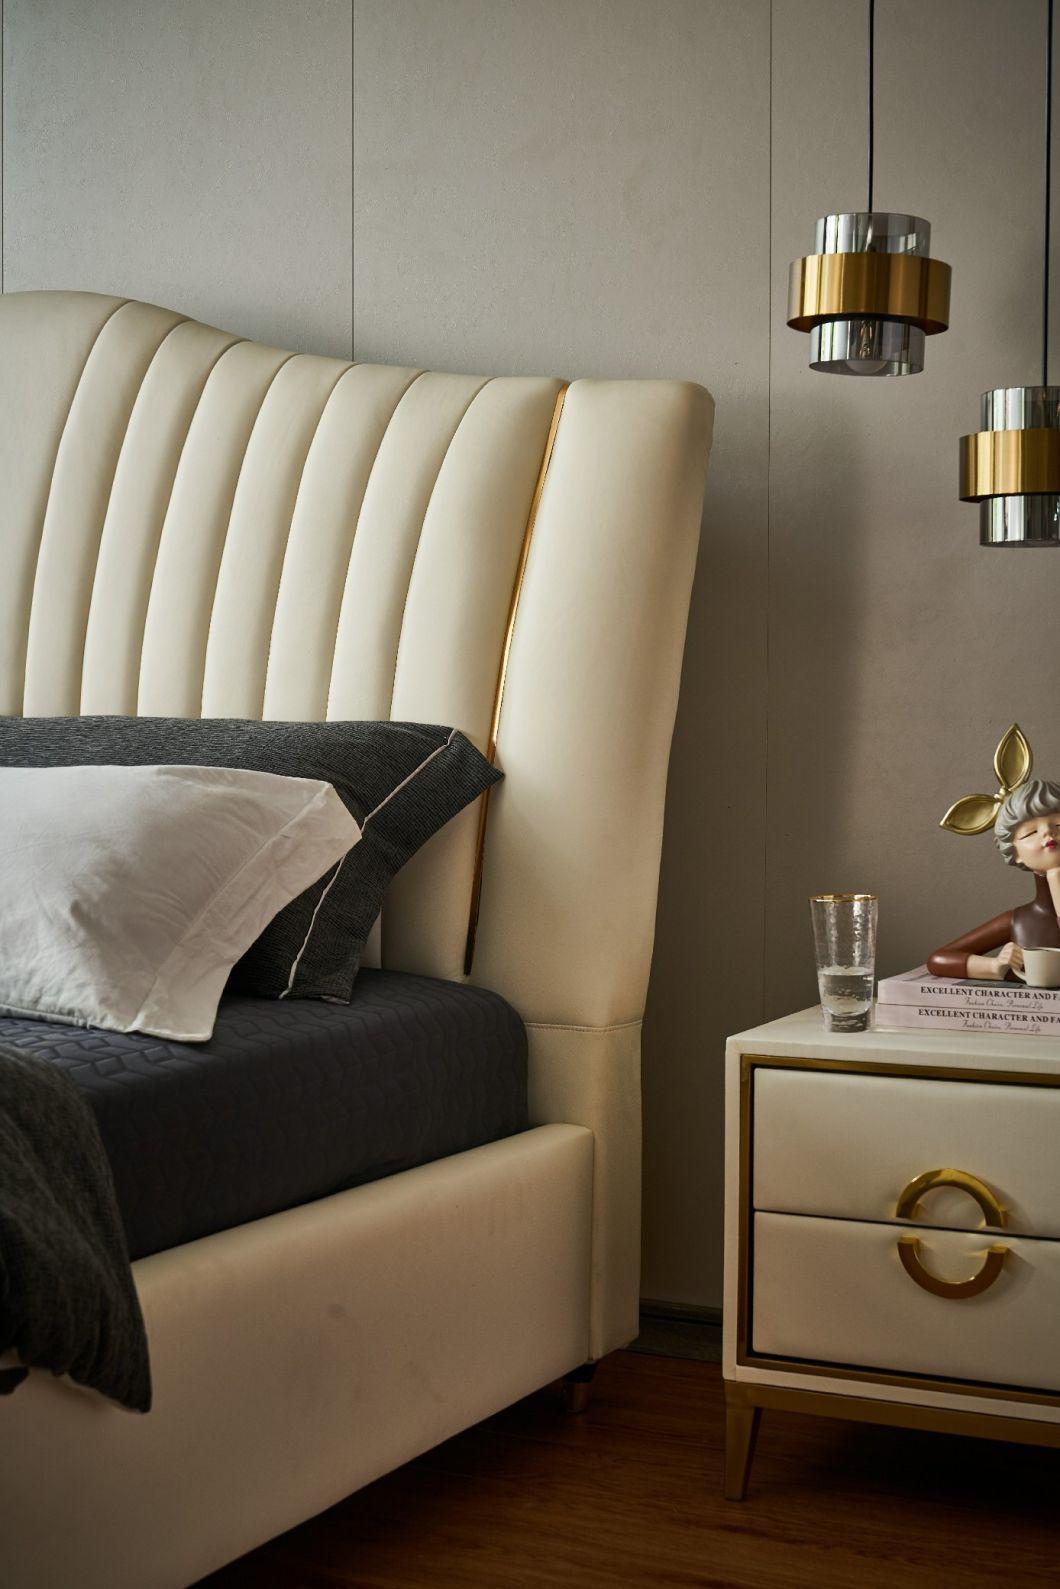 Luxury Home Furniture Set Modern Bedroom Furniture King Bed for Hotel a-Wf015